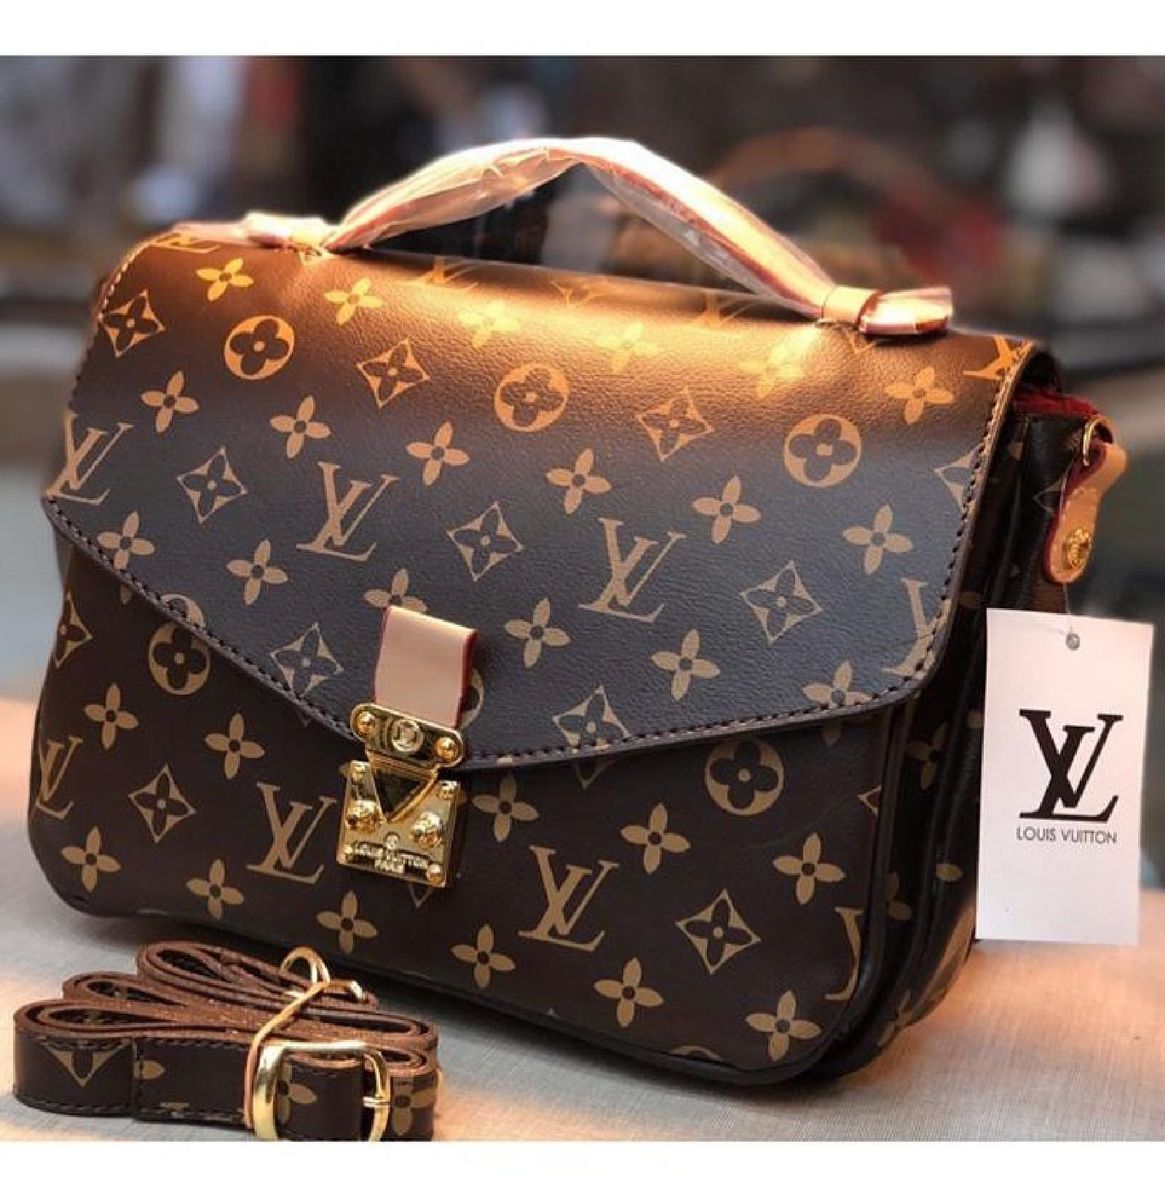 Bolsas Louis Vuitton | Clutch Feminina Louis Vuitton Novo 39885253 | enjoei